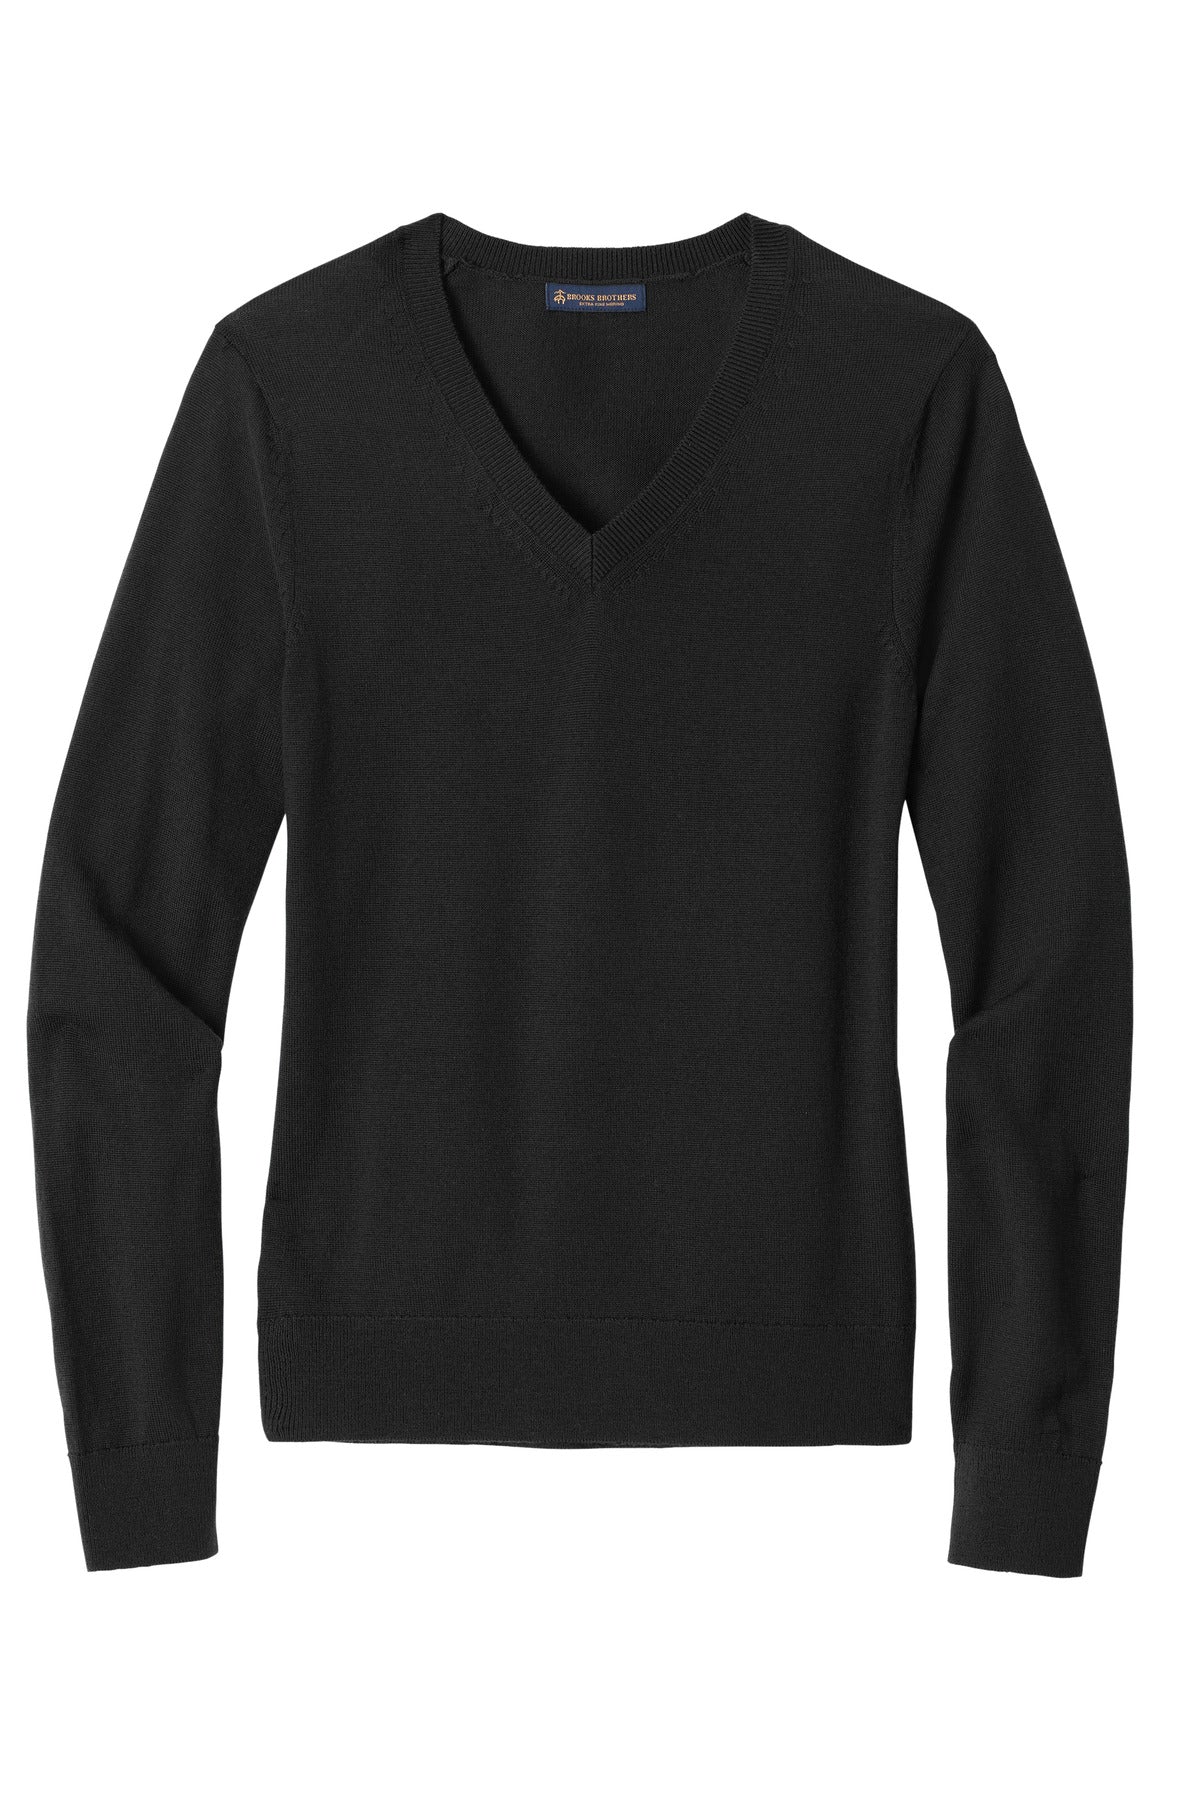 Brooks Brothers Women's Washable Merino V-Neck Sweater BB18411